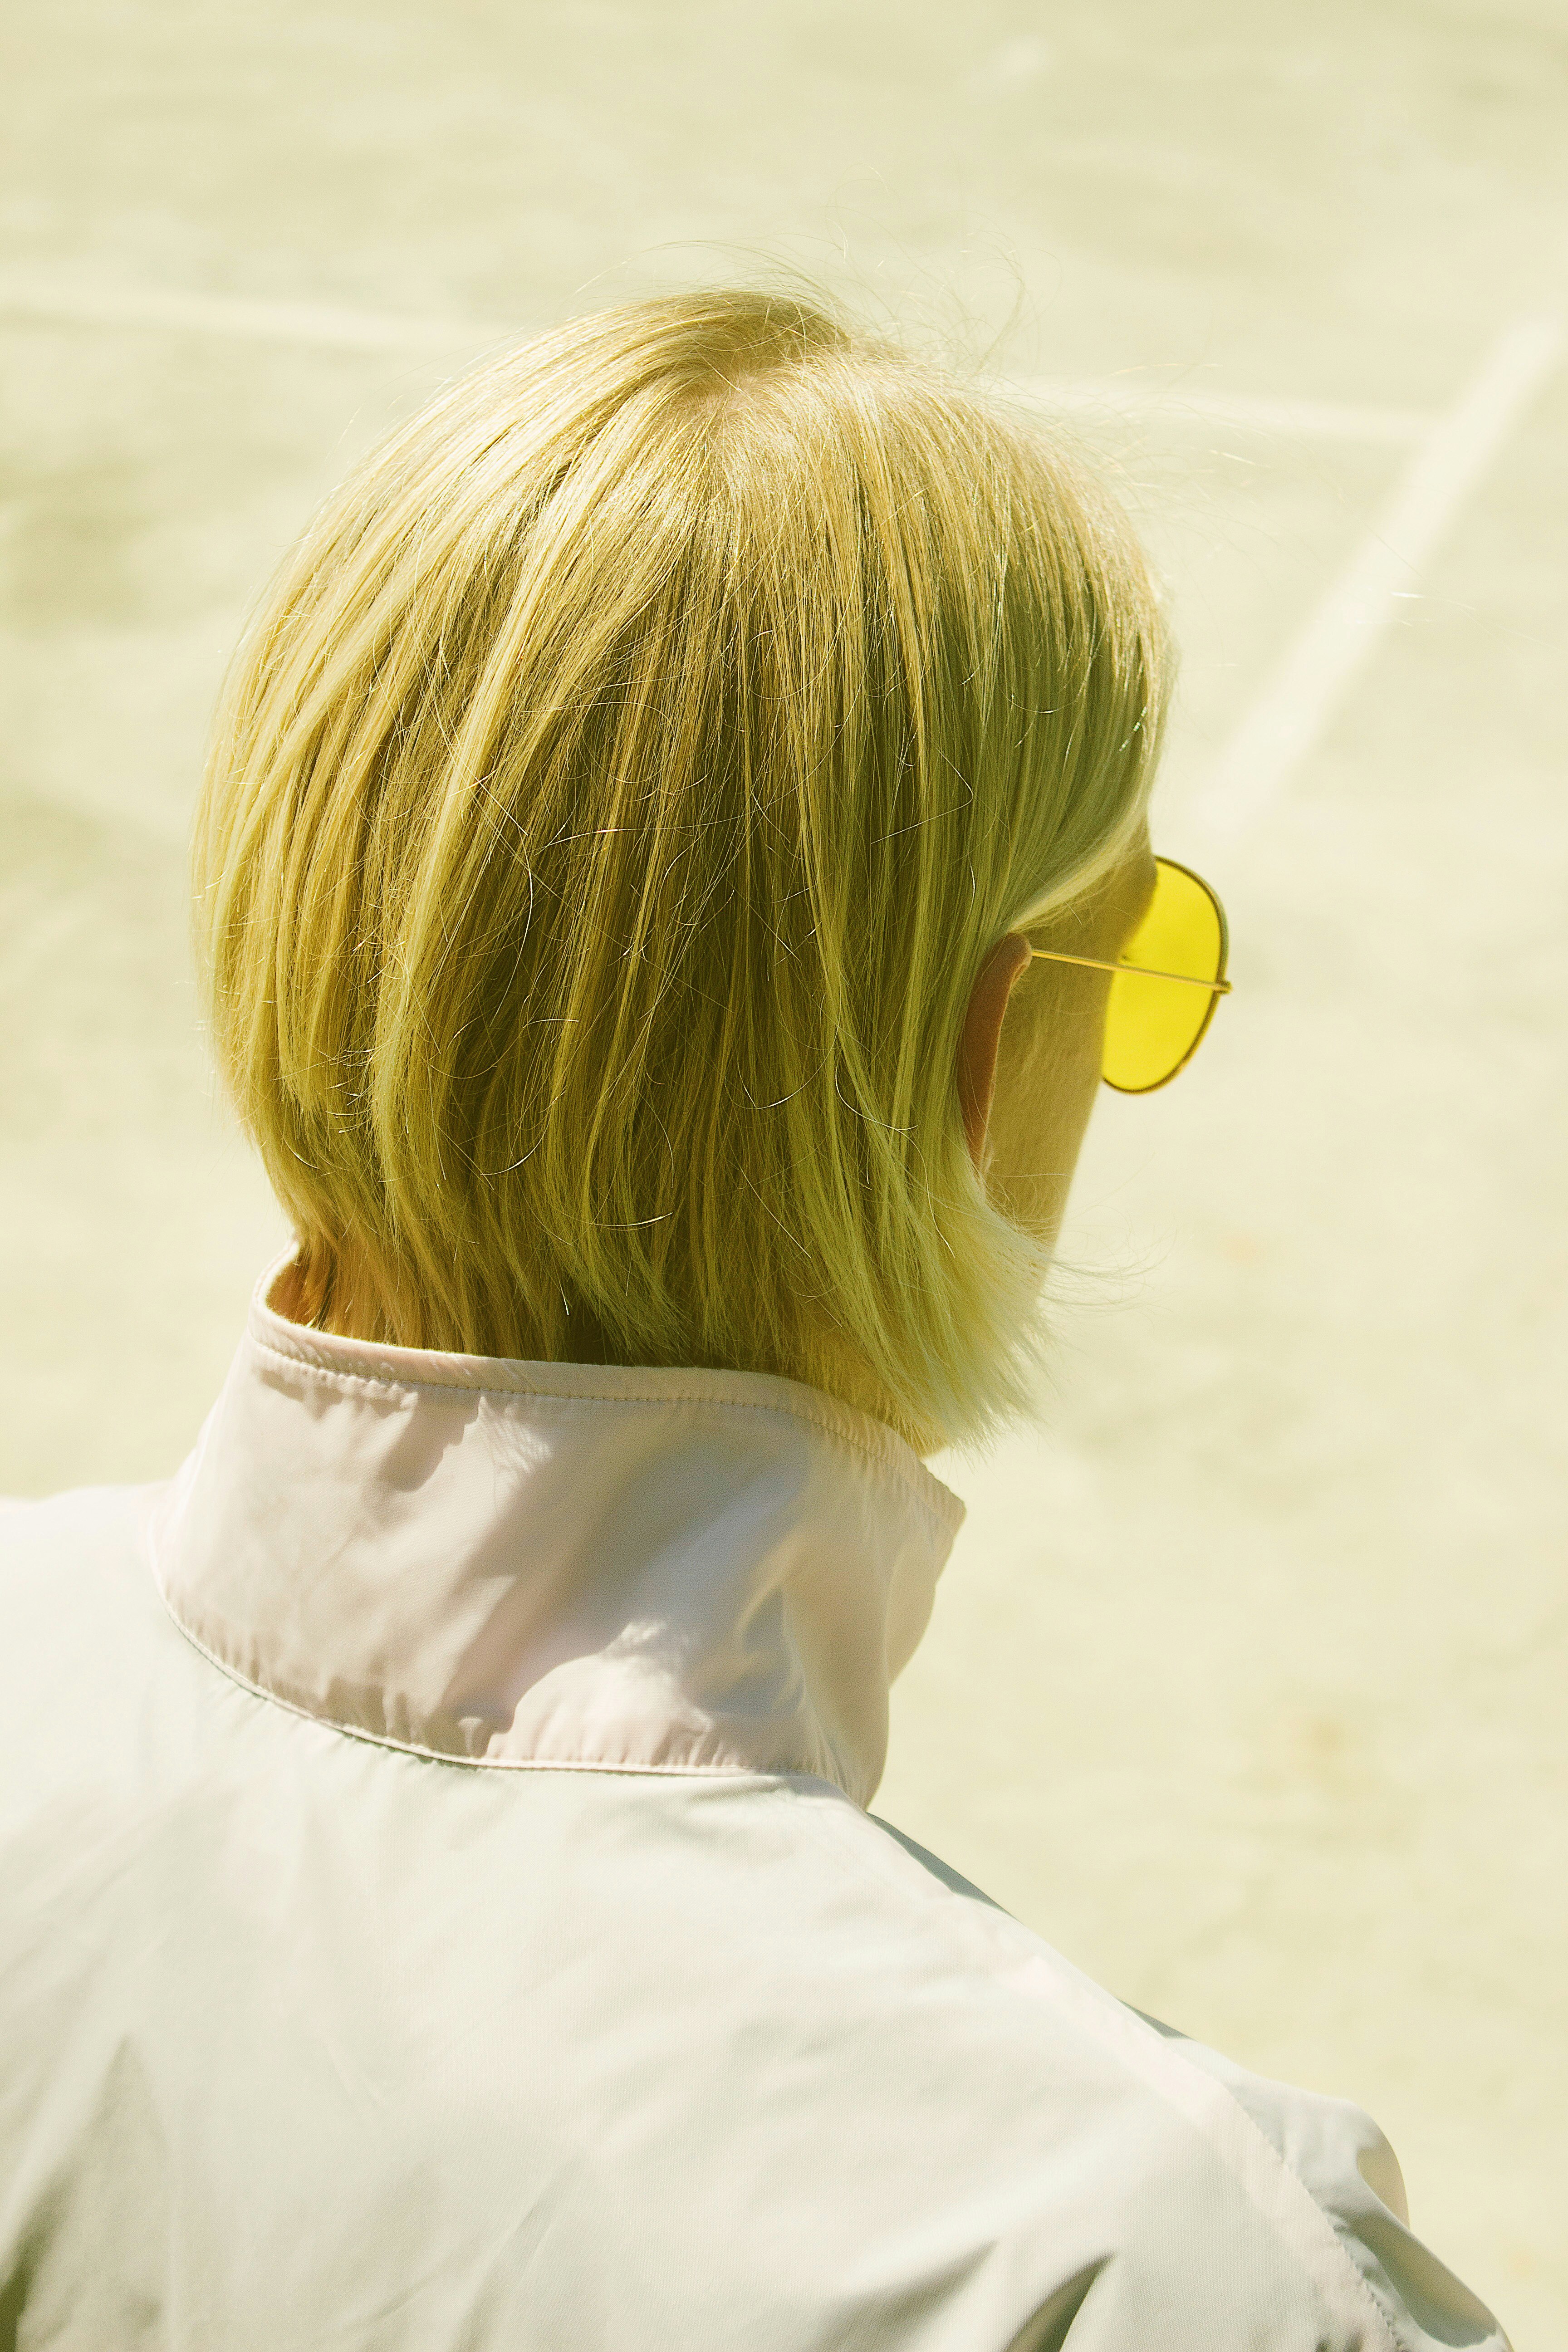 person wearing yellow sunglasses